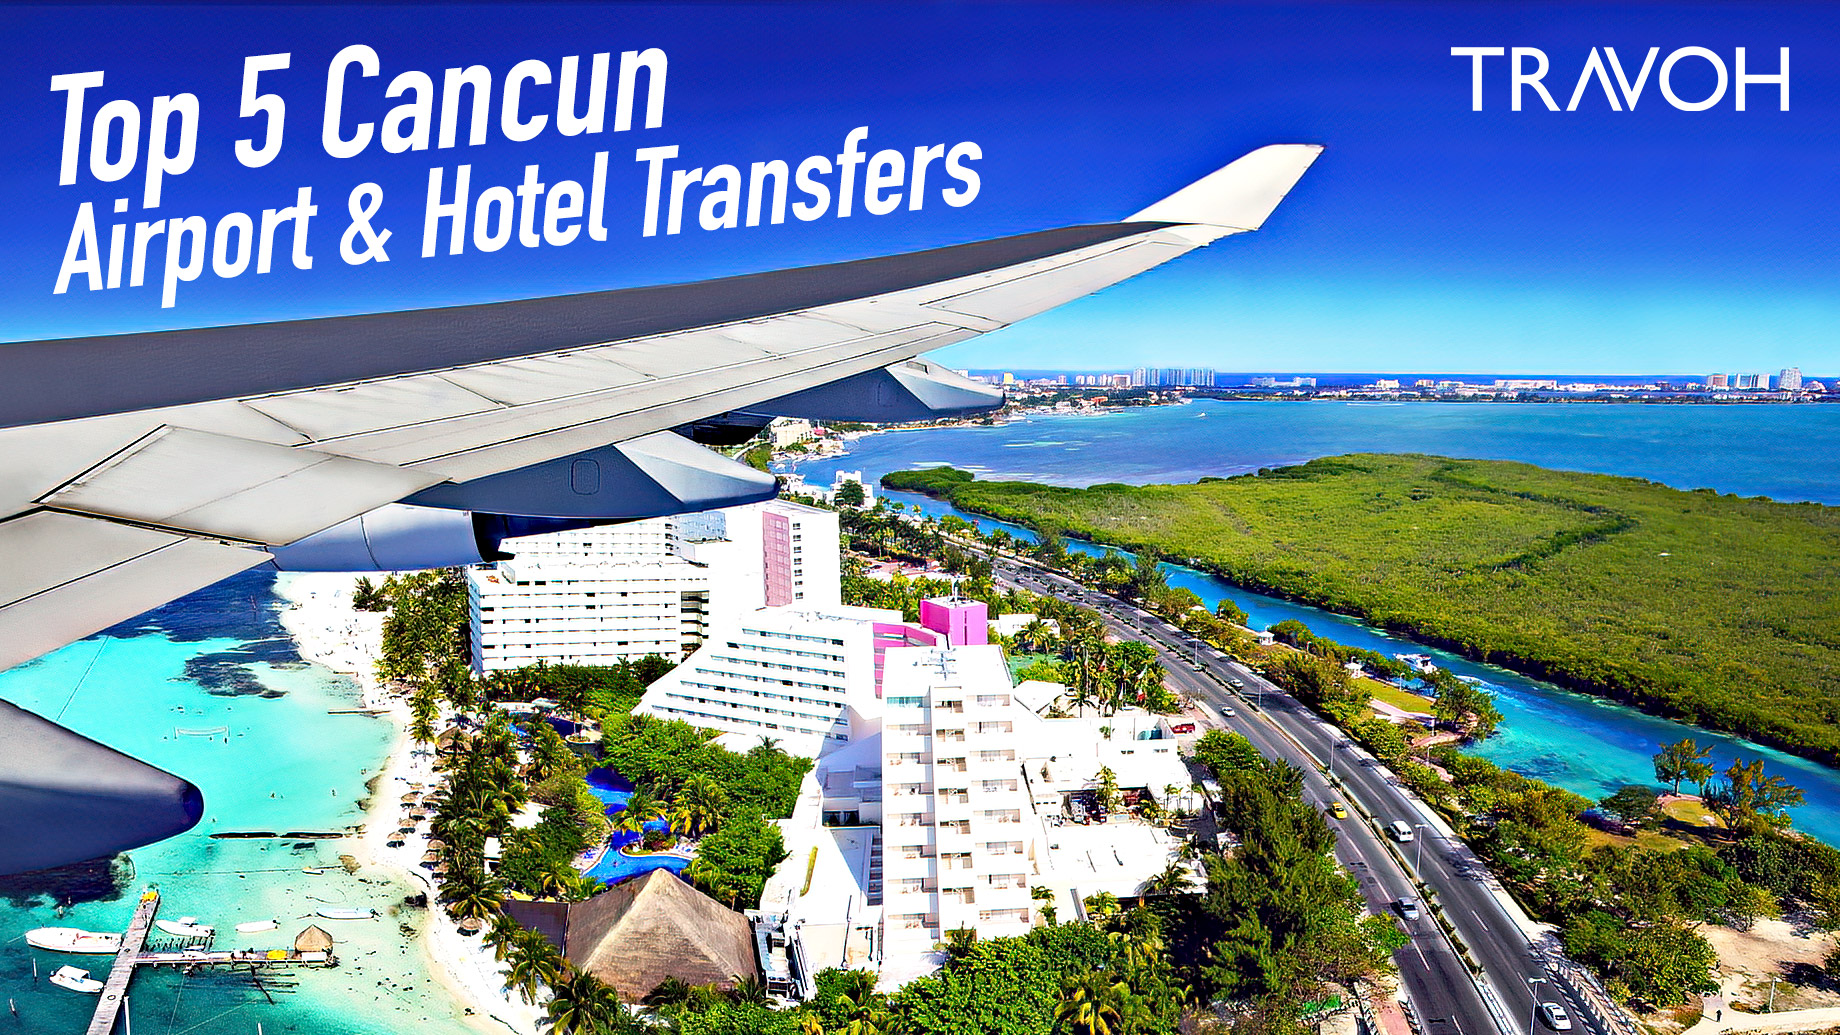 Top 5 Cancun Airport & Hotel Transfers